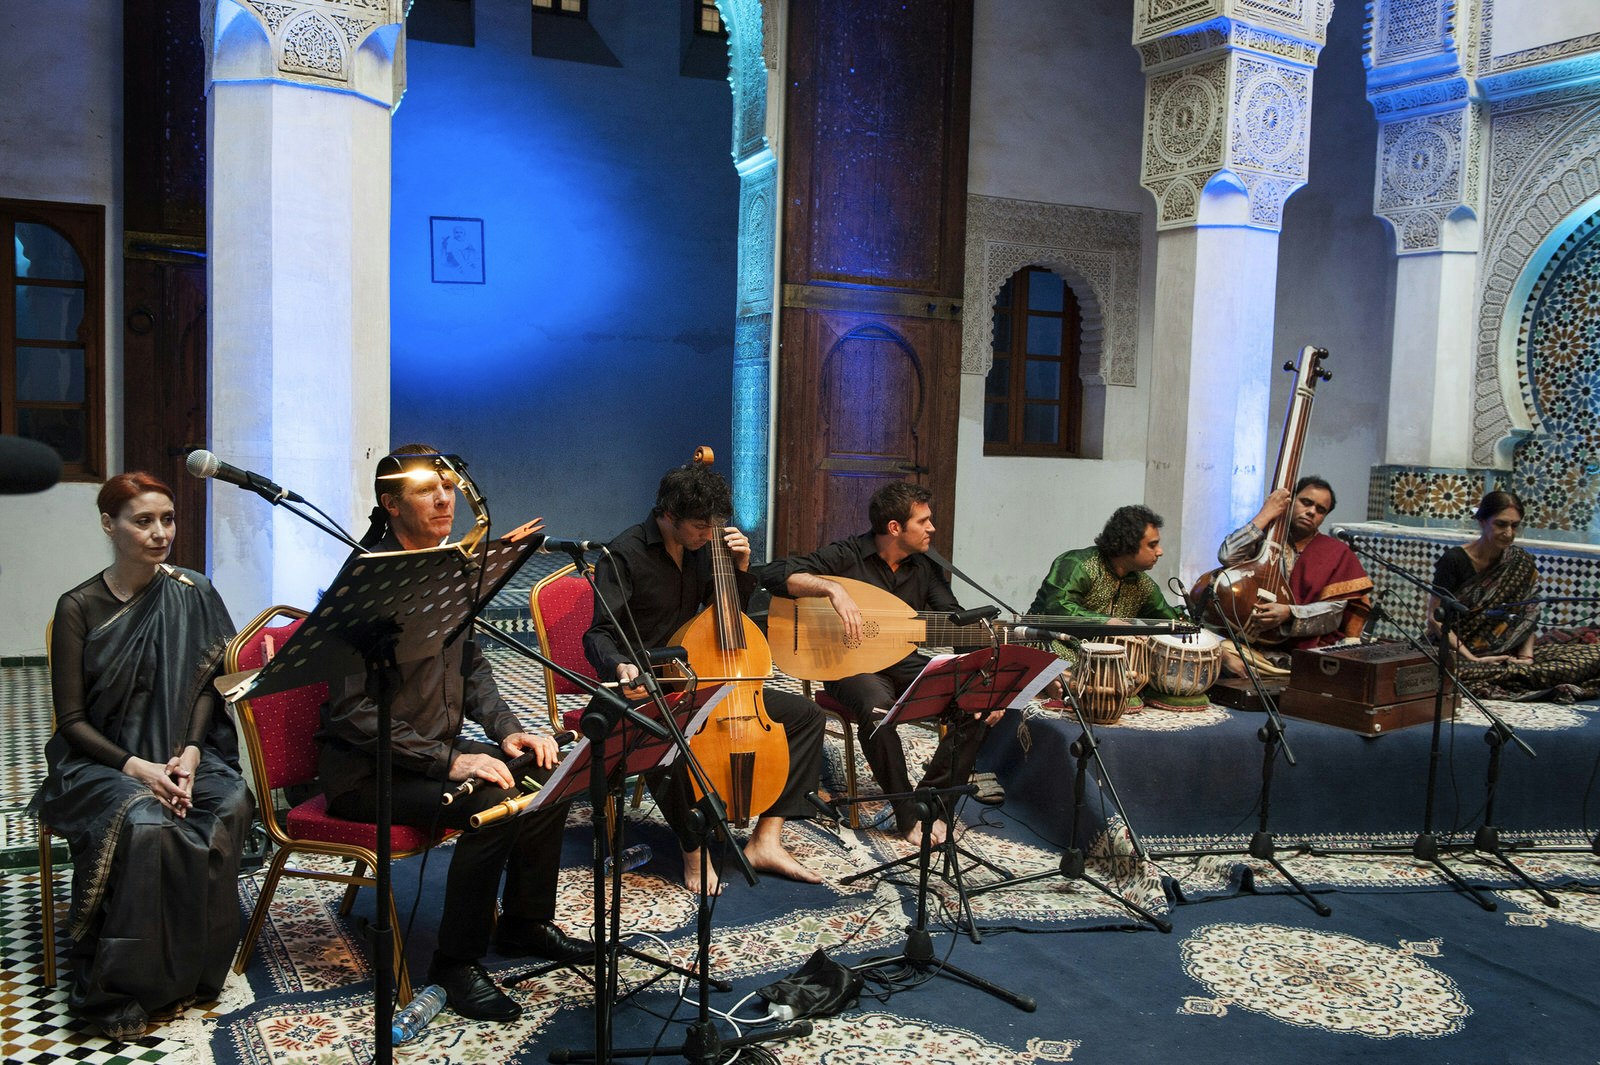 Fes Festival of World Sacred Music - XV111-21 perform during the Fes Festival of World Sacred Music in Fez, Morocco. 